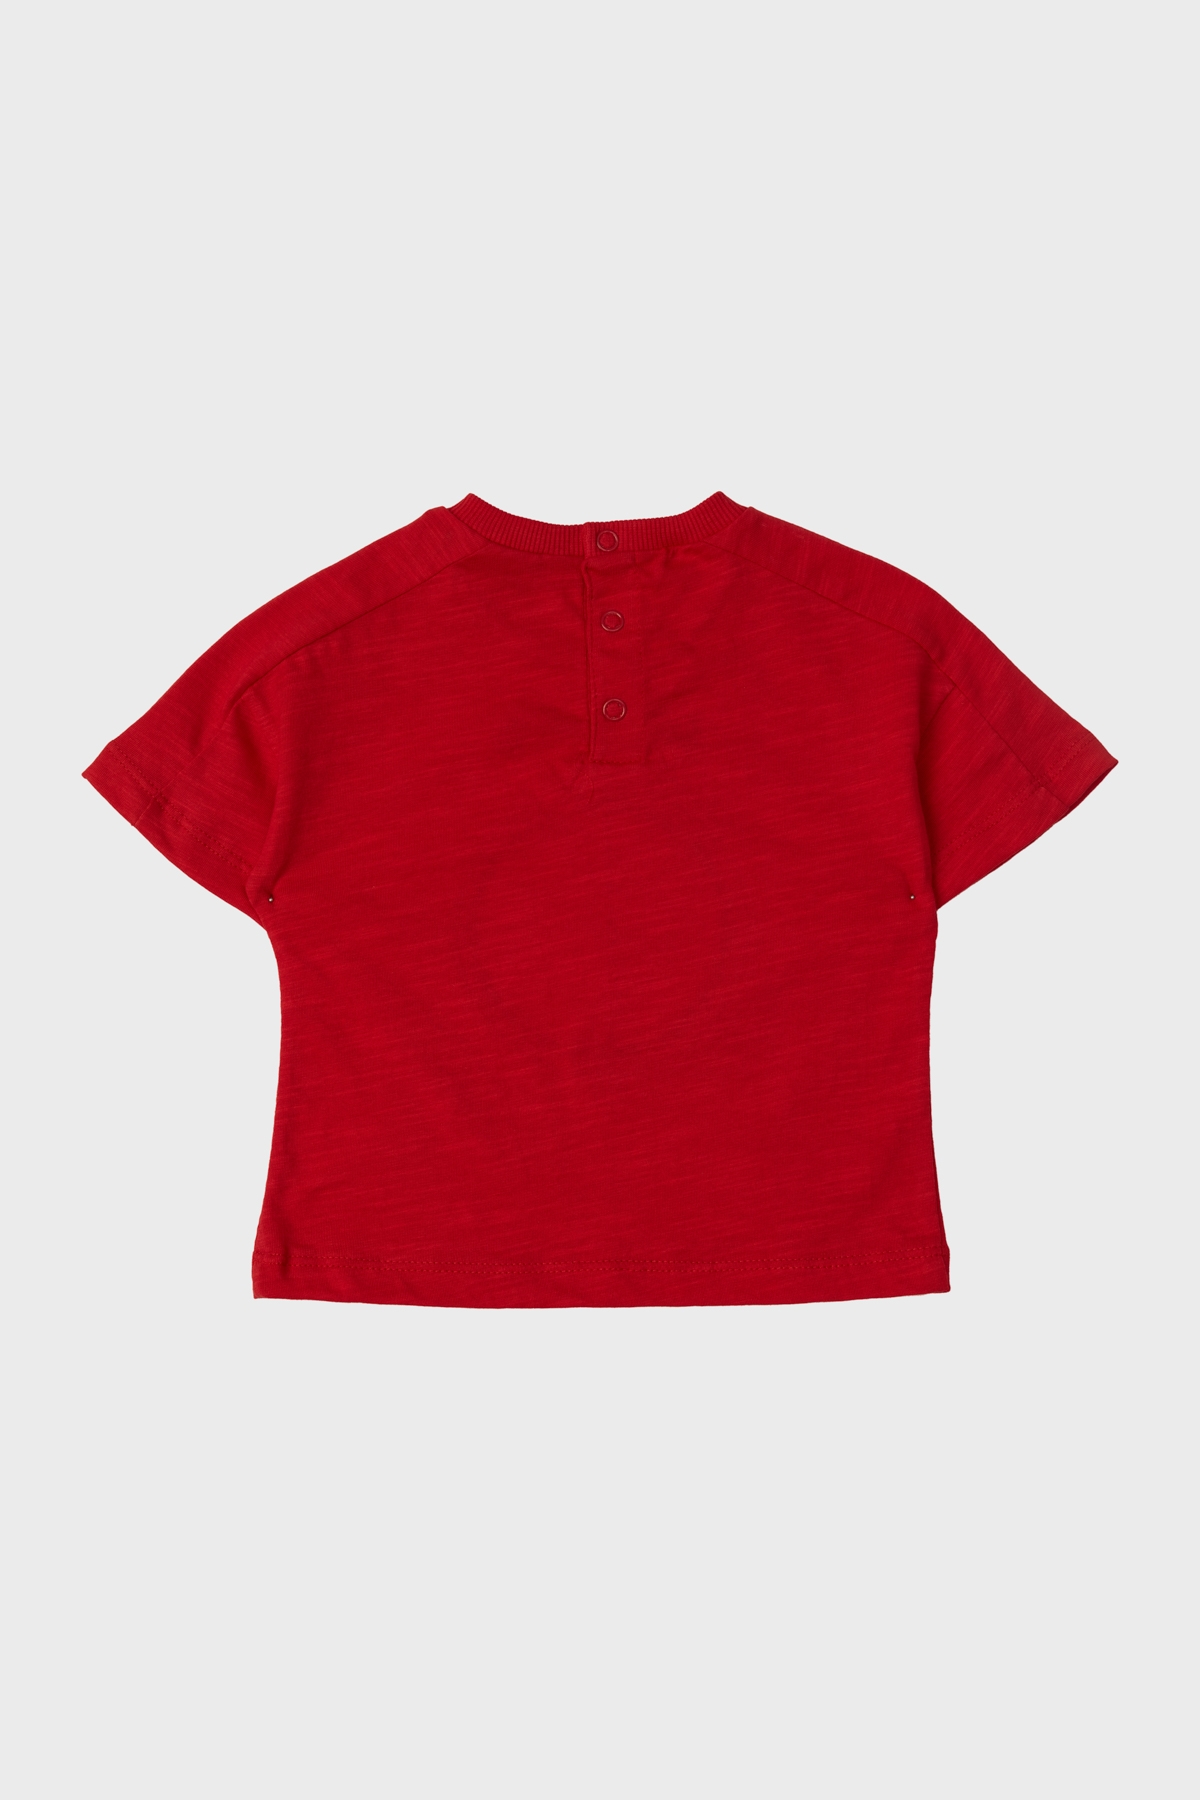 Erkek Bebek Kırmızı T-Shirt